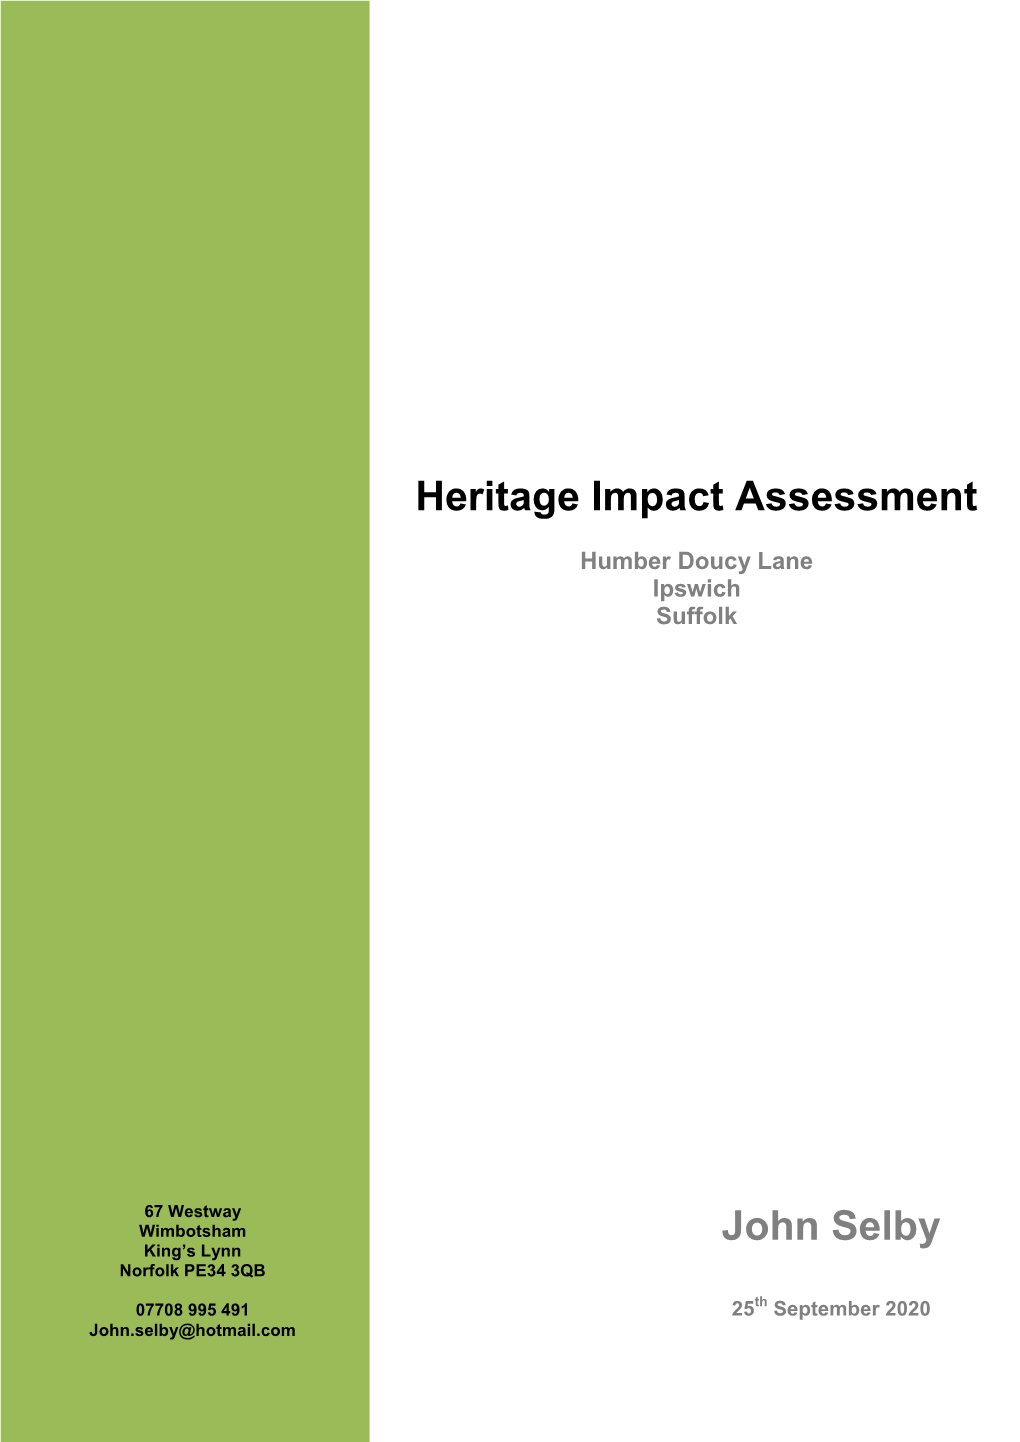 Heritage Impact Assessment John Selby